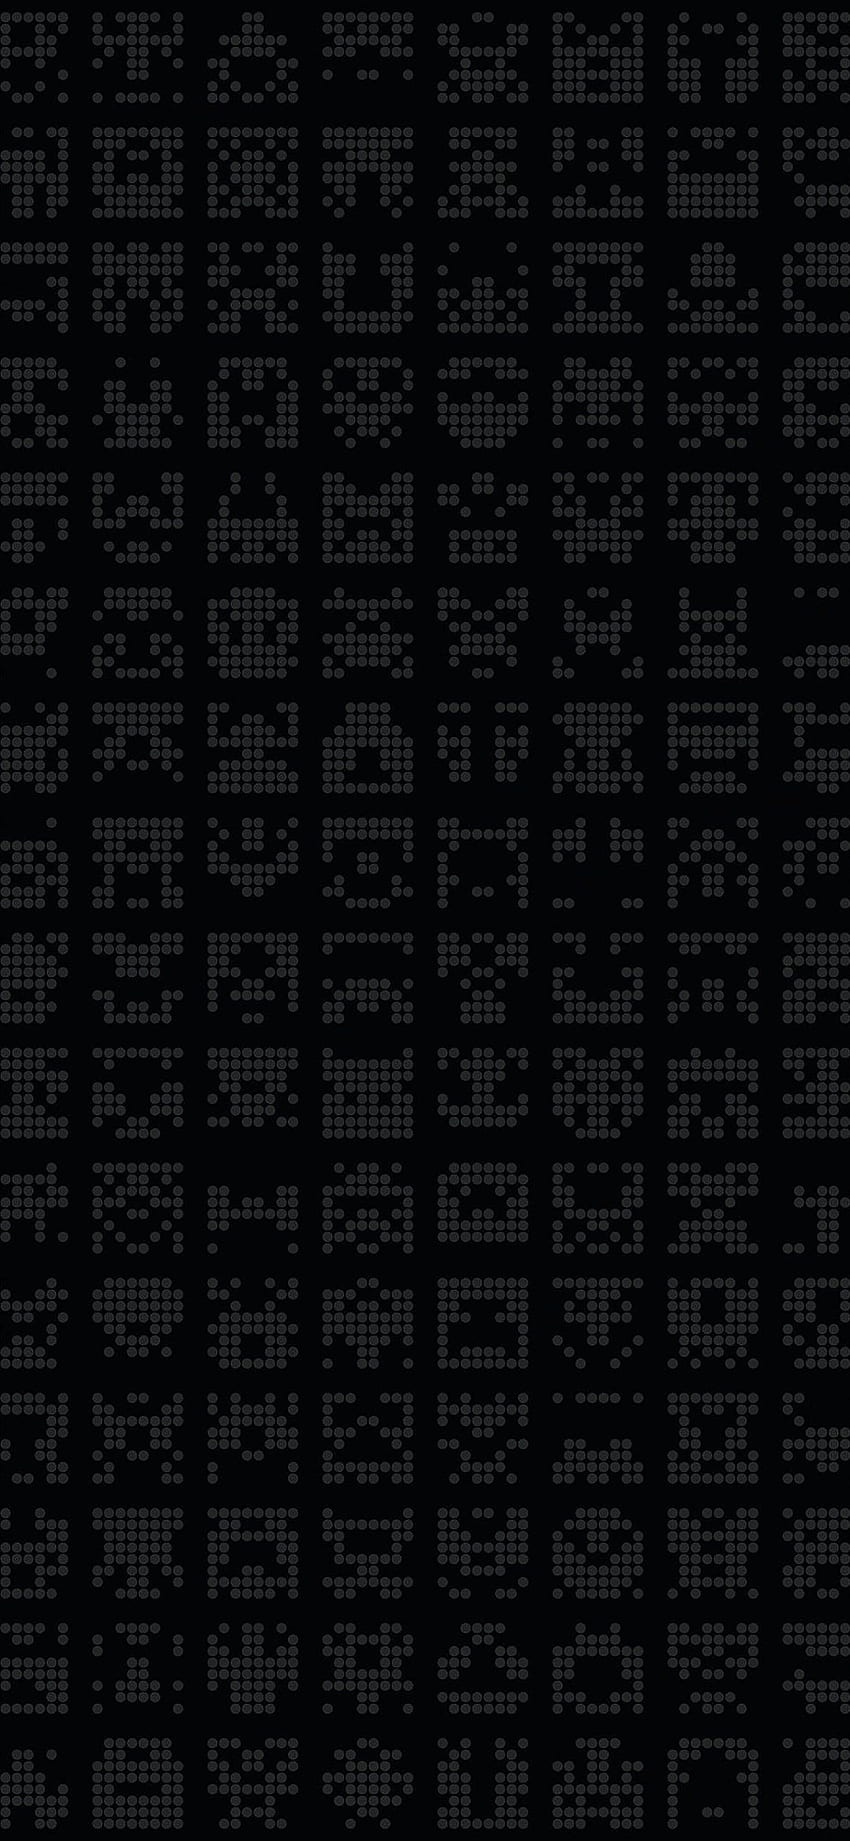 Símbolo alienígena patrón oscuro iPhone X, iPhone con patrón negro fondo de pantalla del teléfono